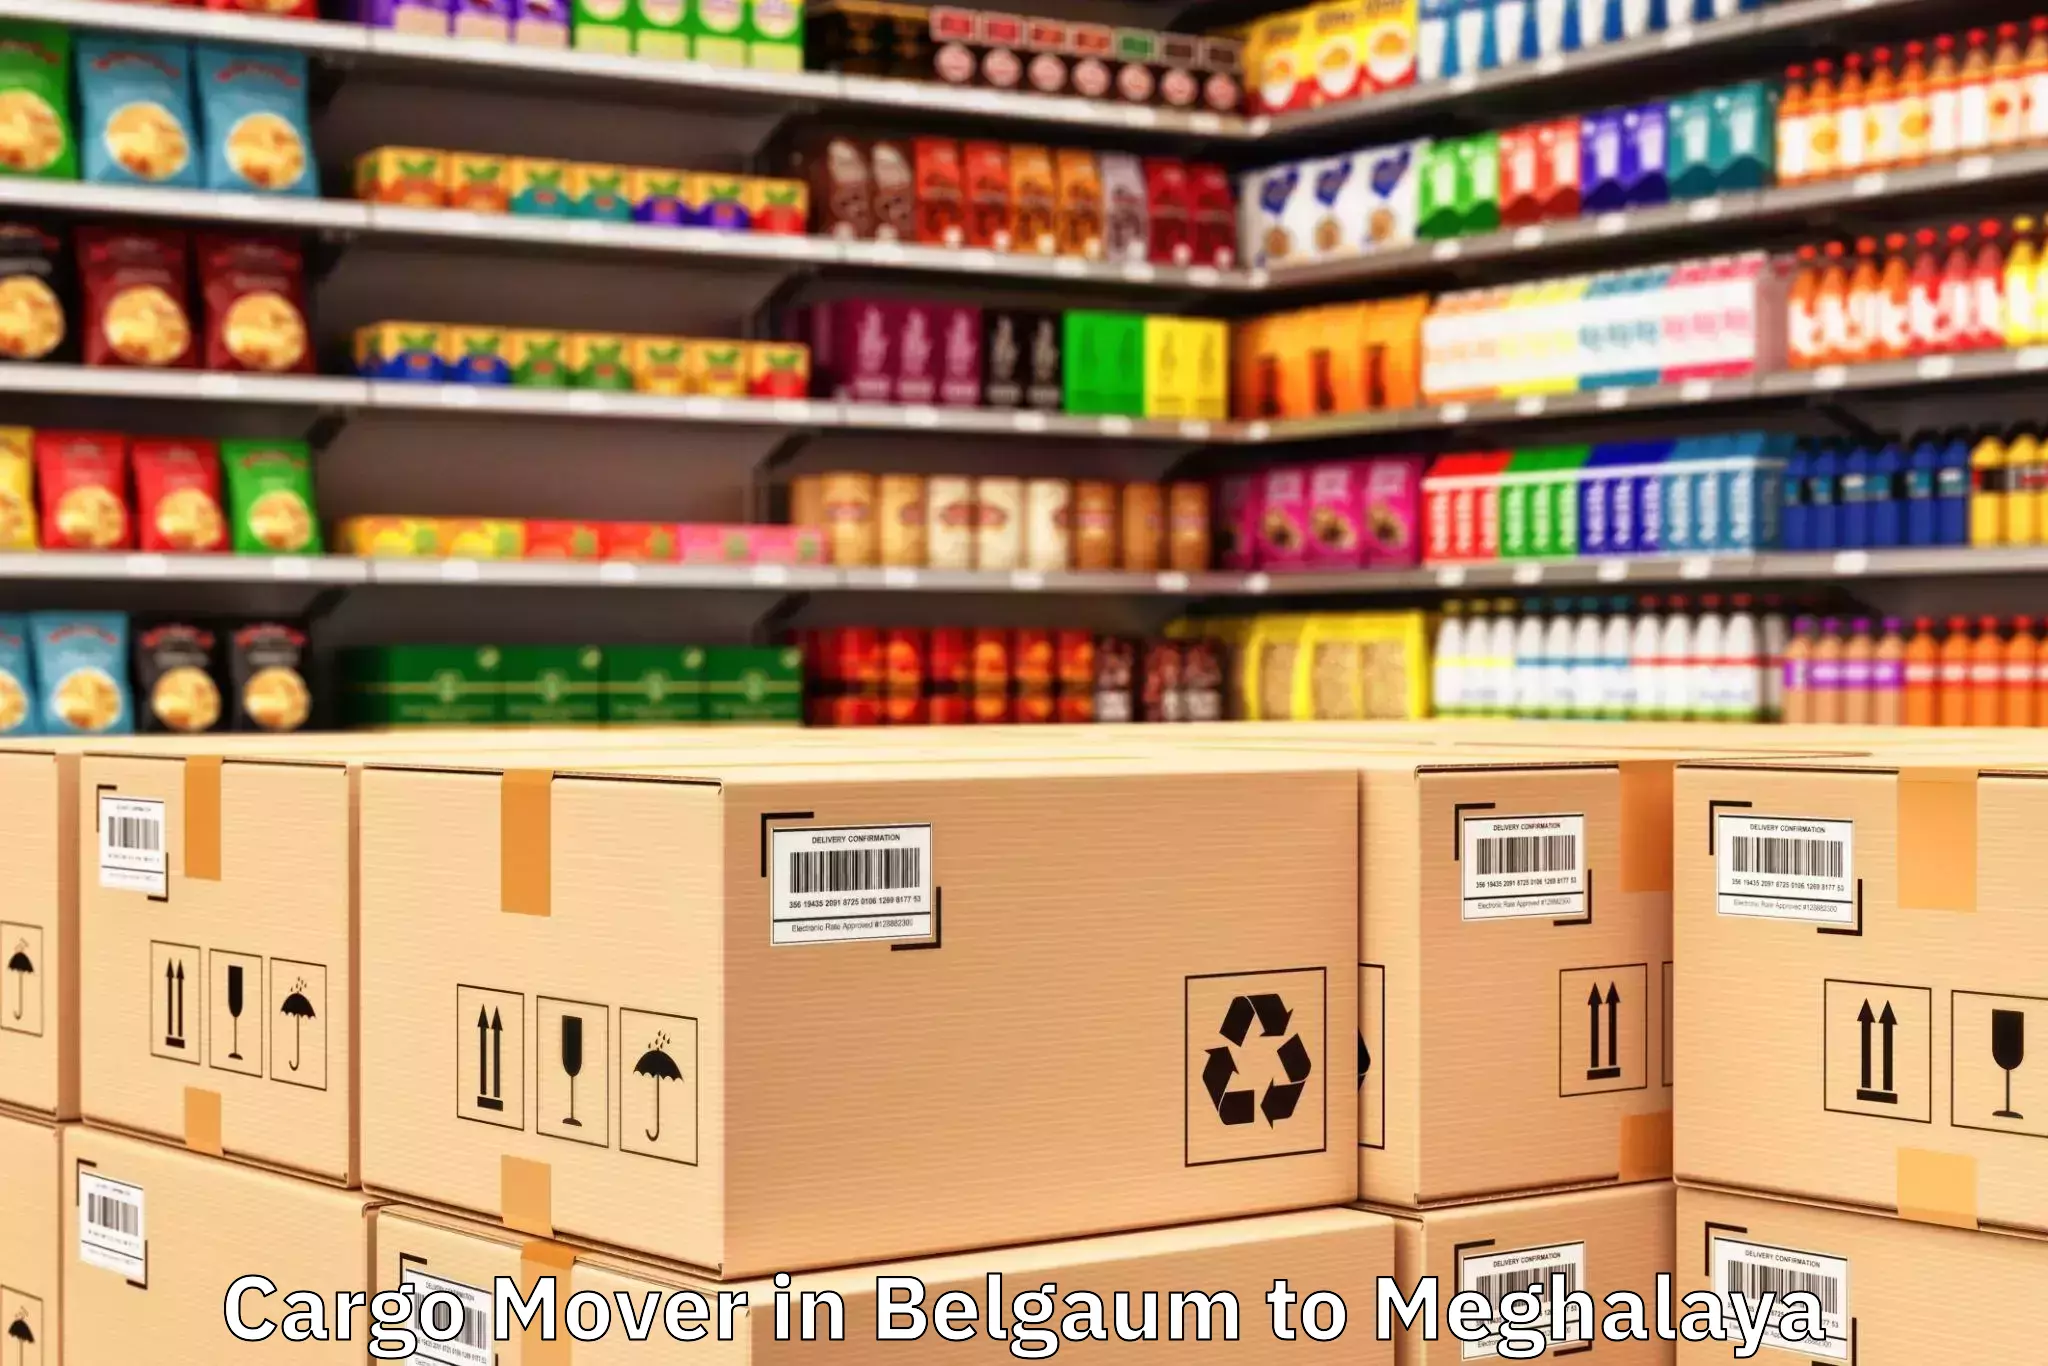 Belgaum to Betasing Cargo Mover